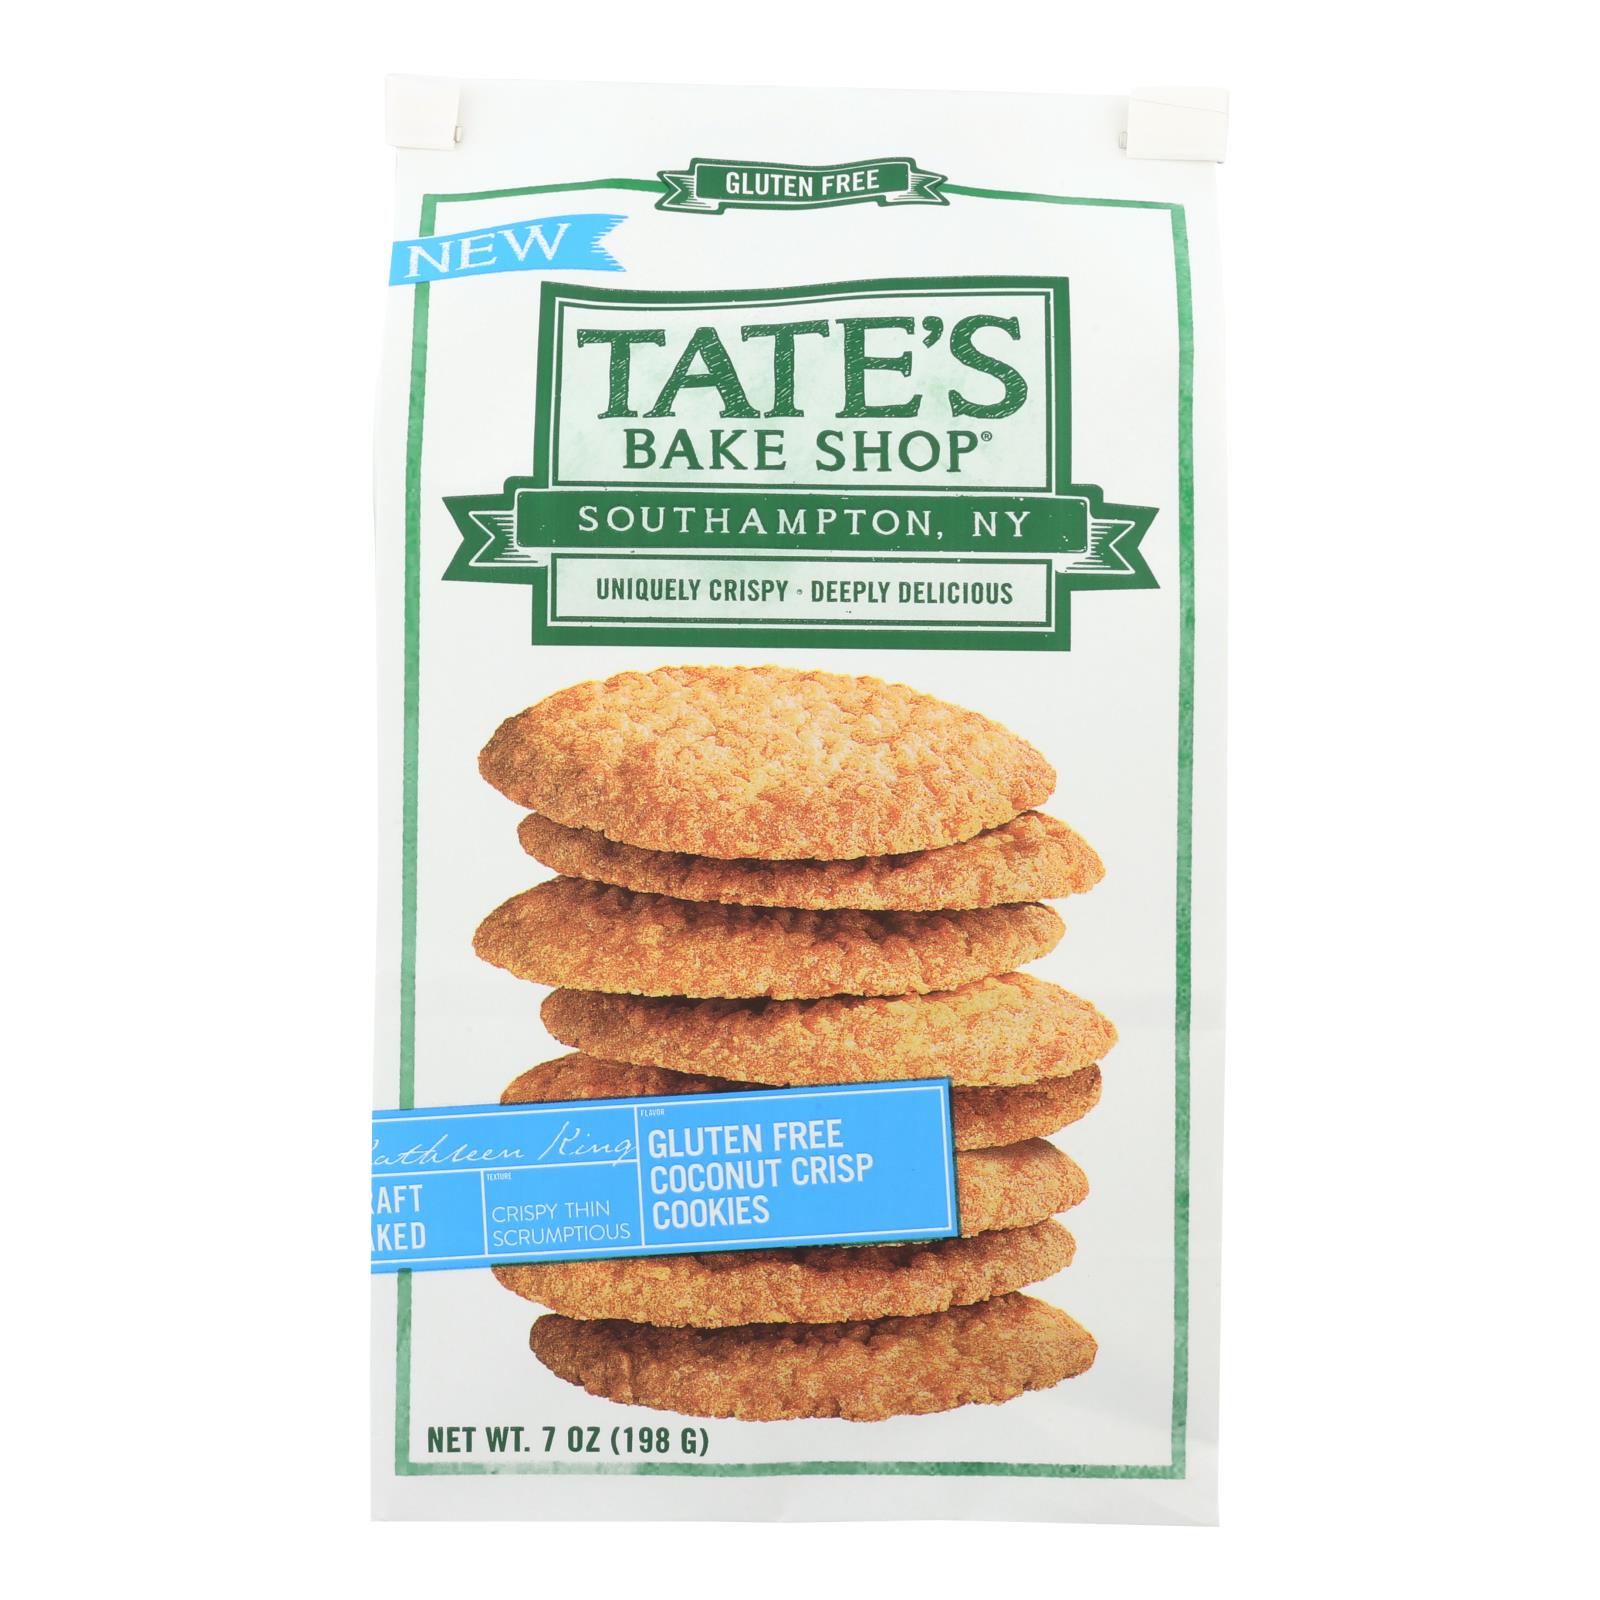 Tate's Bake Shop Gluten Free Coconut Crisp Cookies - 12개 묶음상품 - 7 OZ